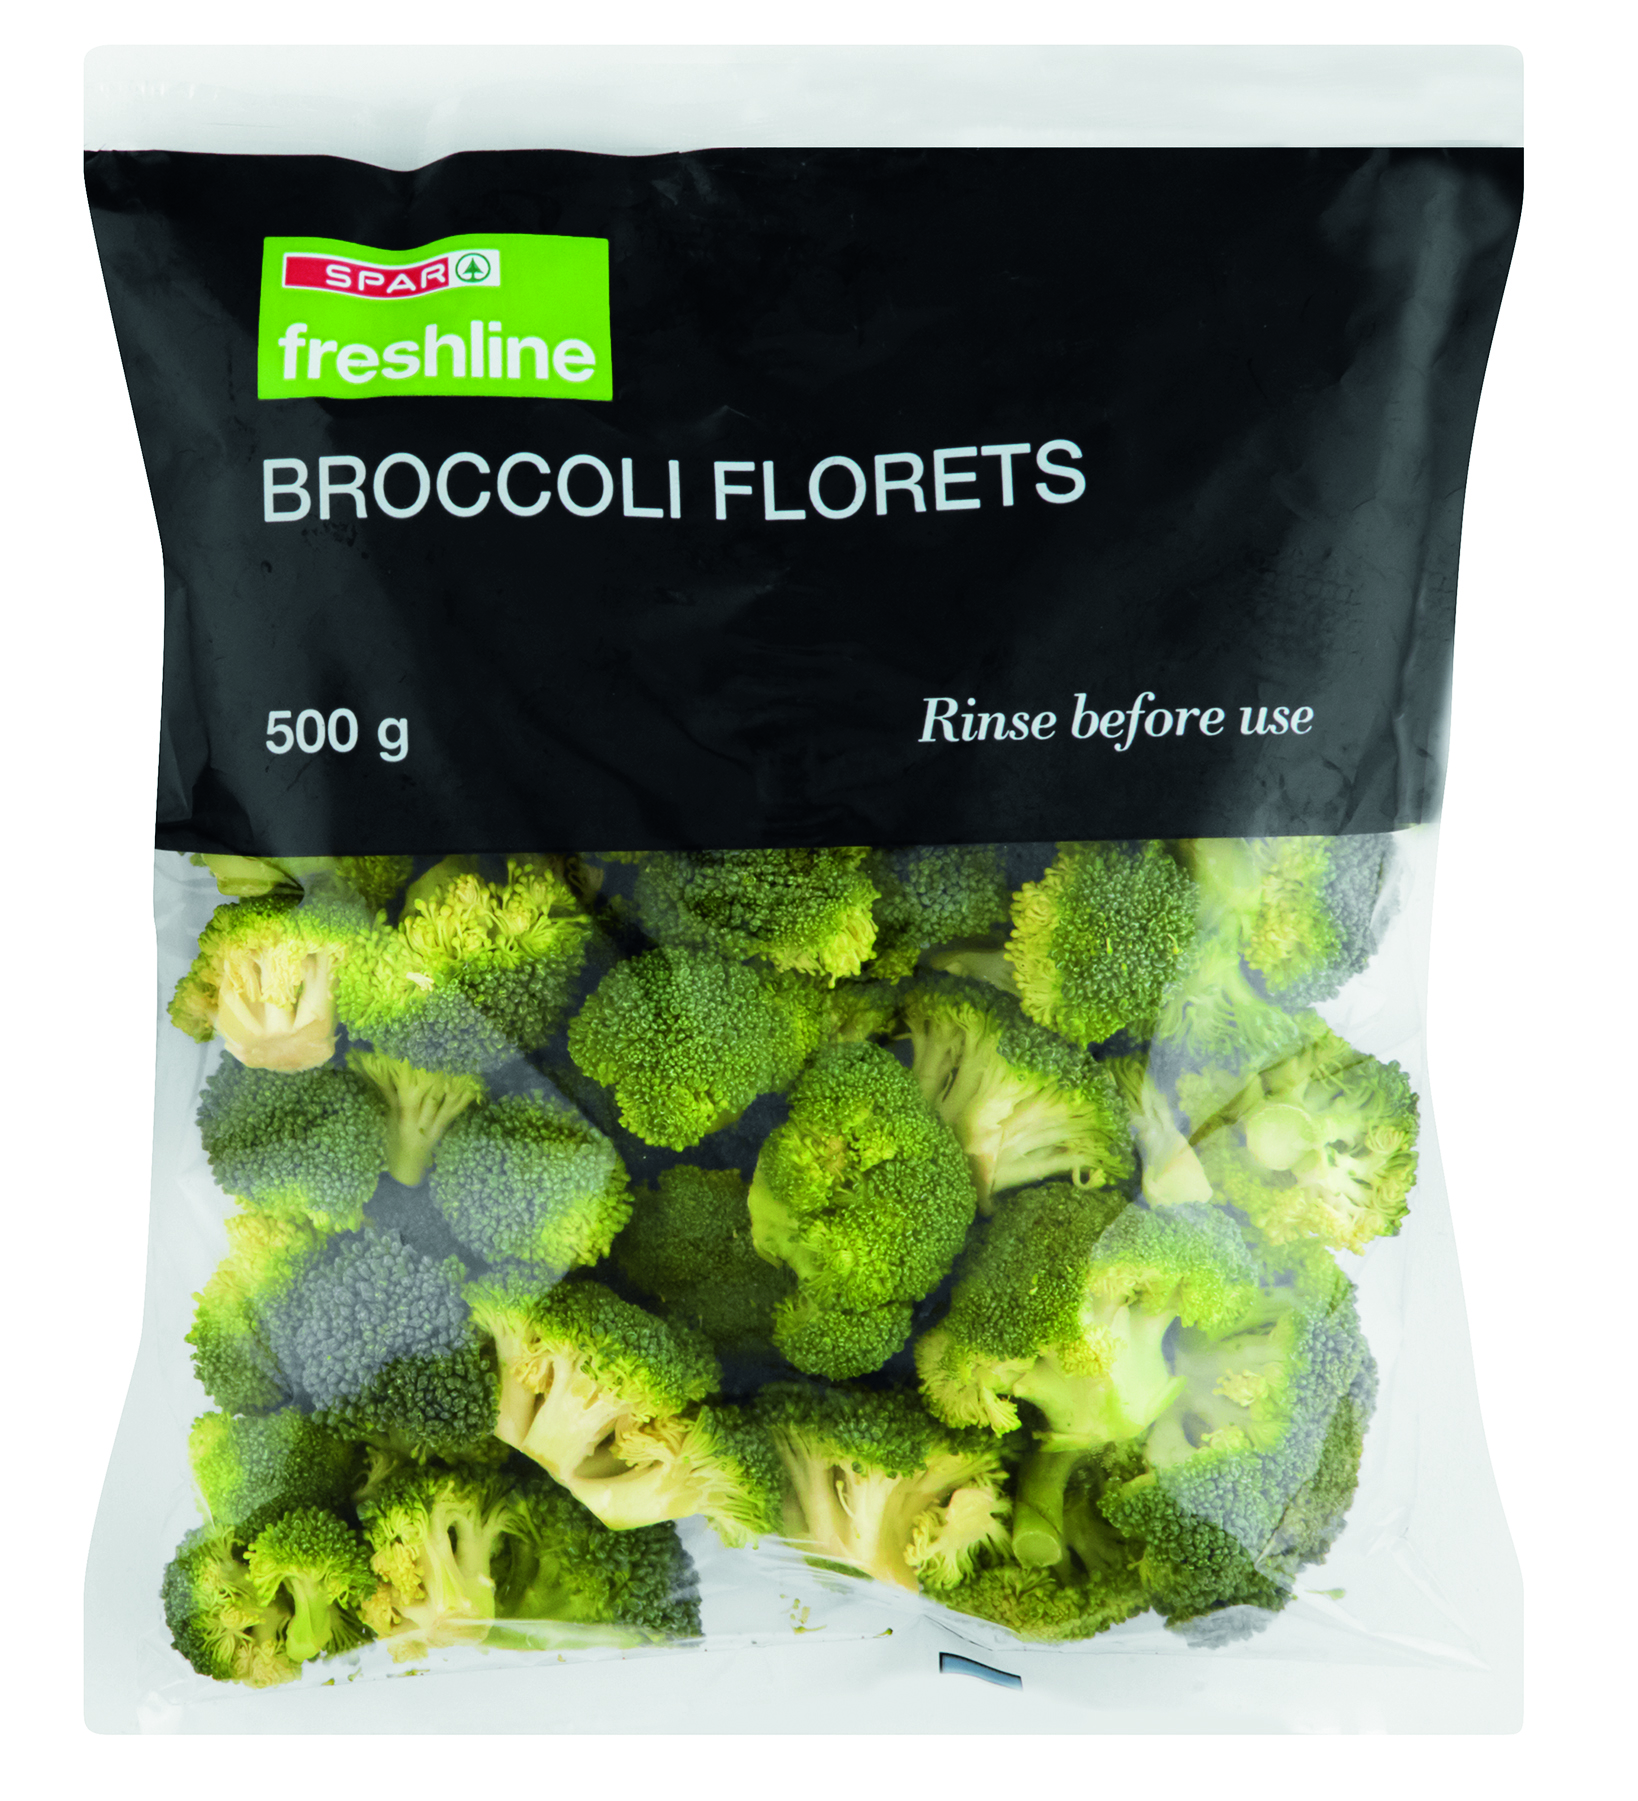 freshline broccoli florets  